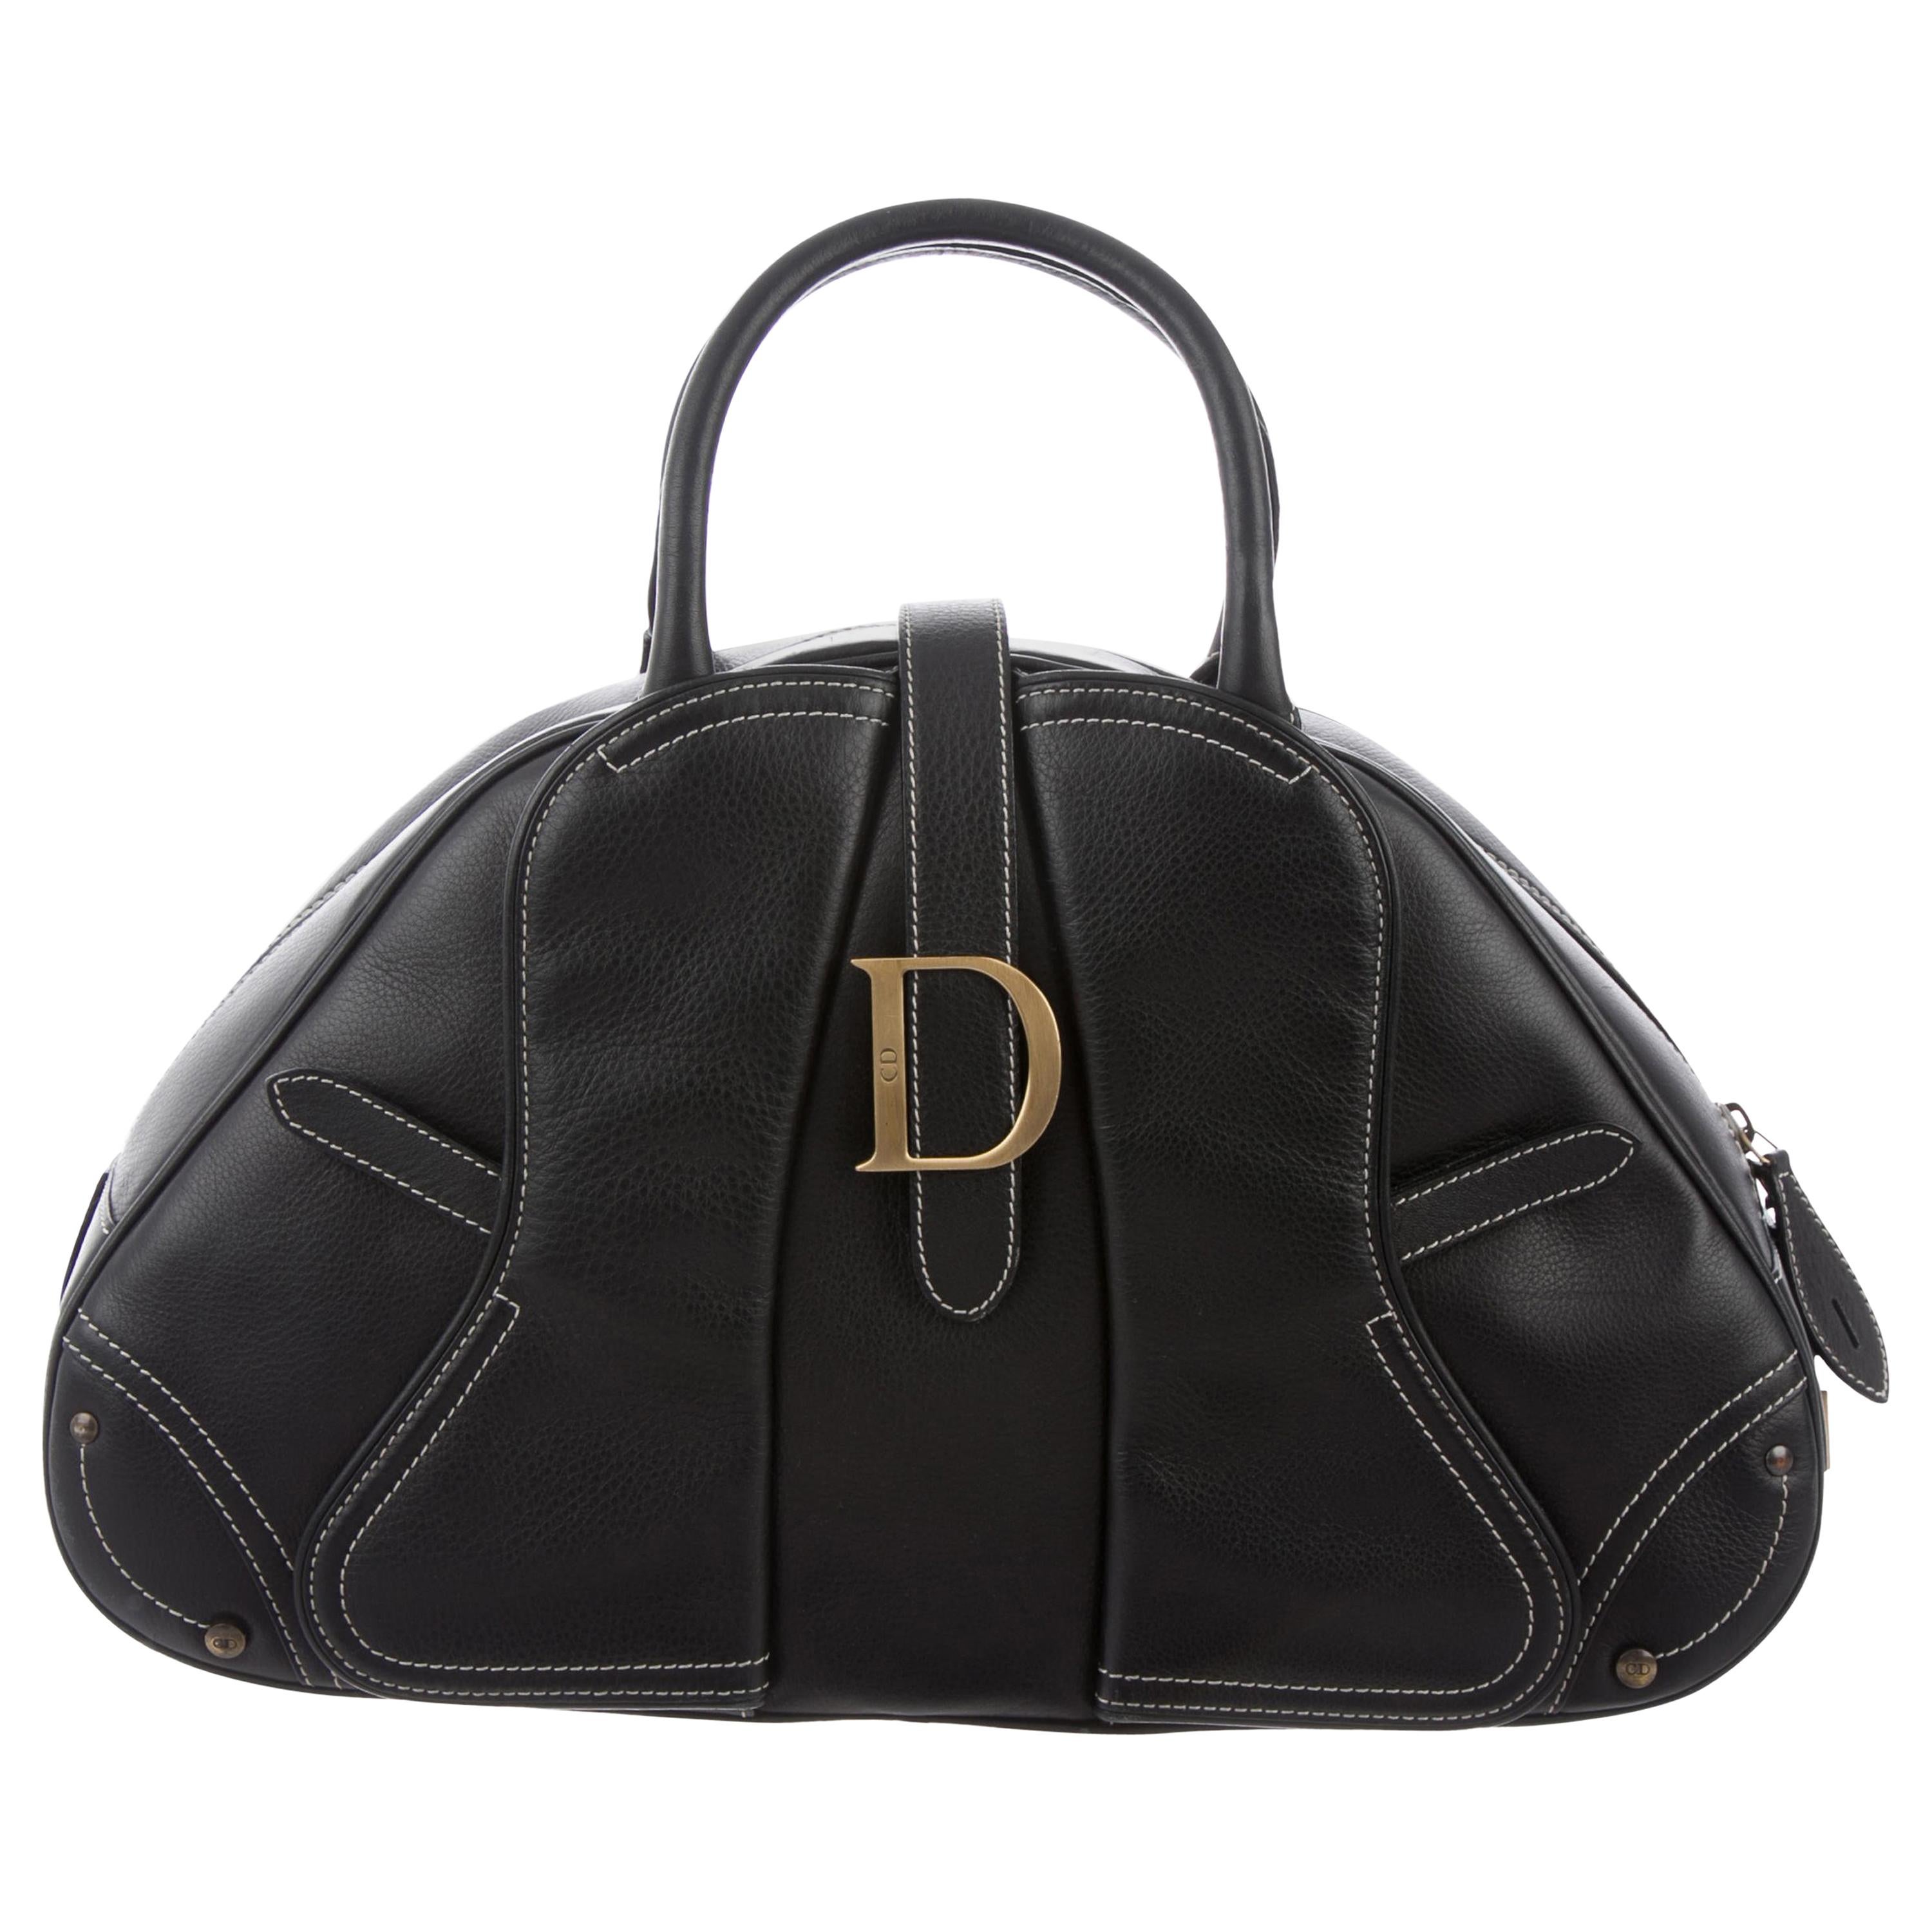 Christian Dior Black Leather Gold "D" Charm Buckle Top Handle Satchel Bag